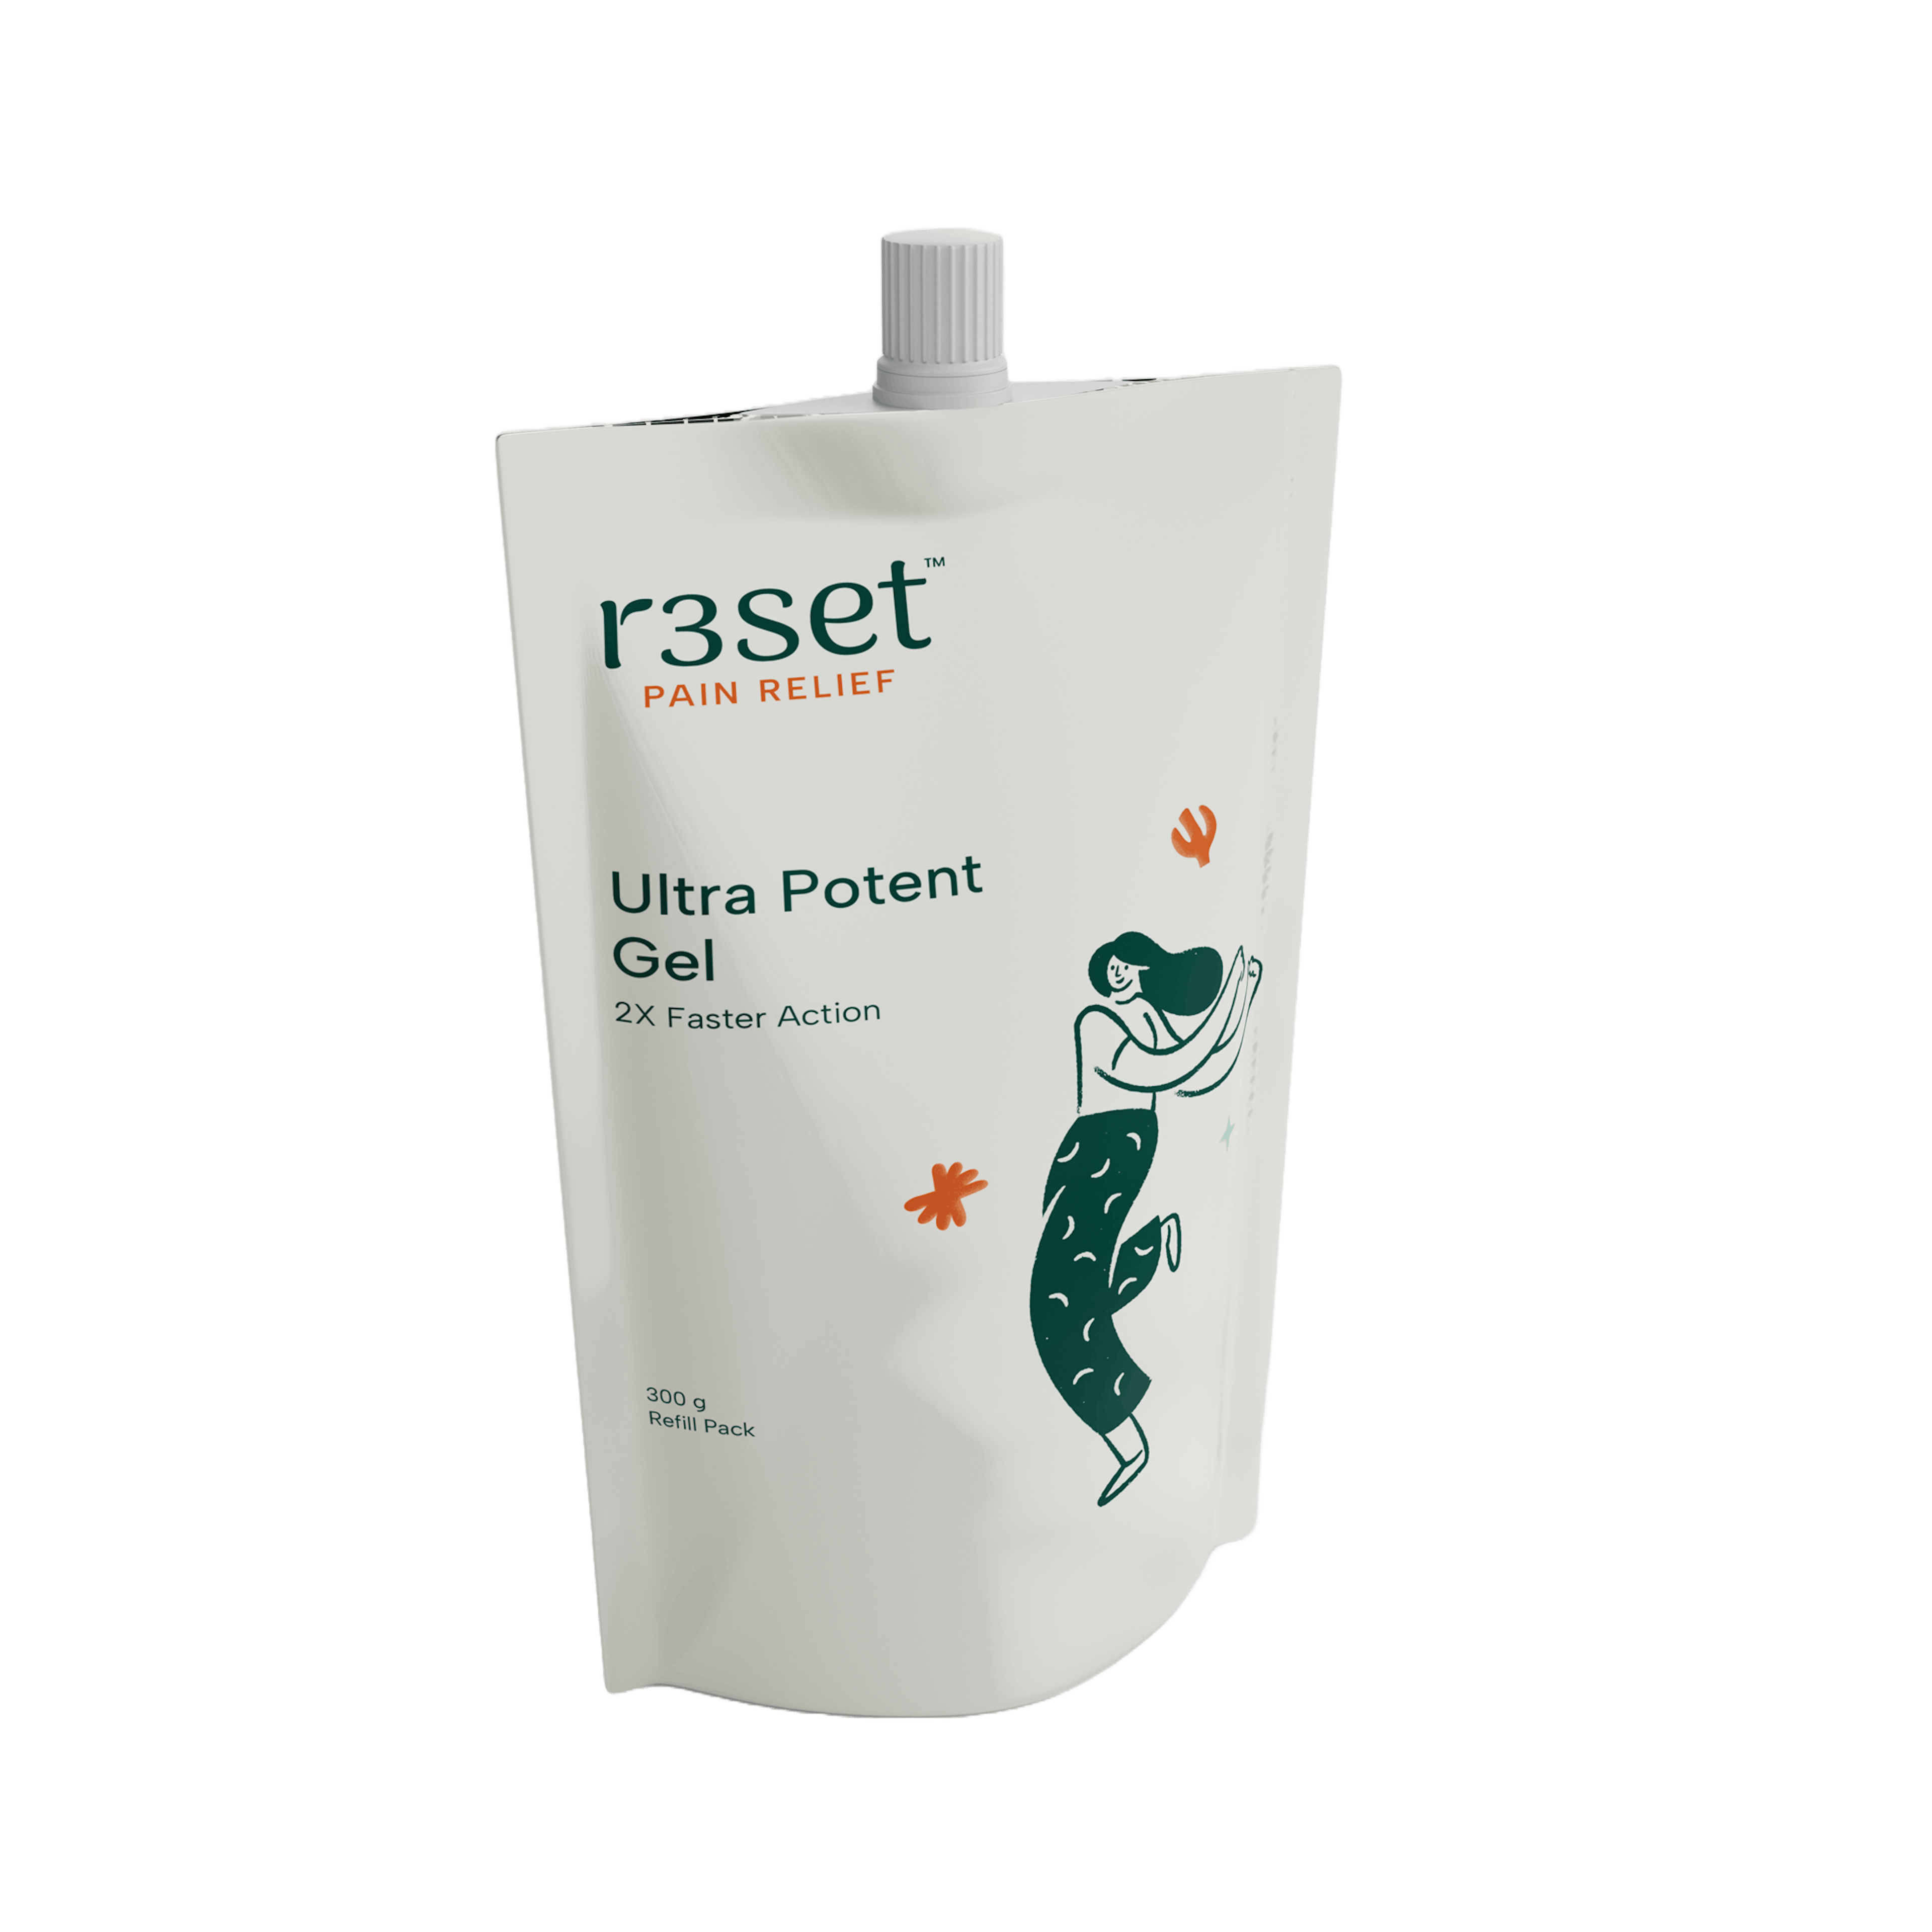 Ultra potent gel - Refill pack